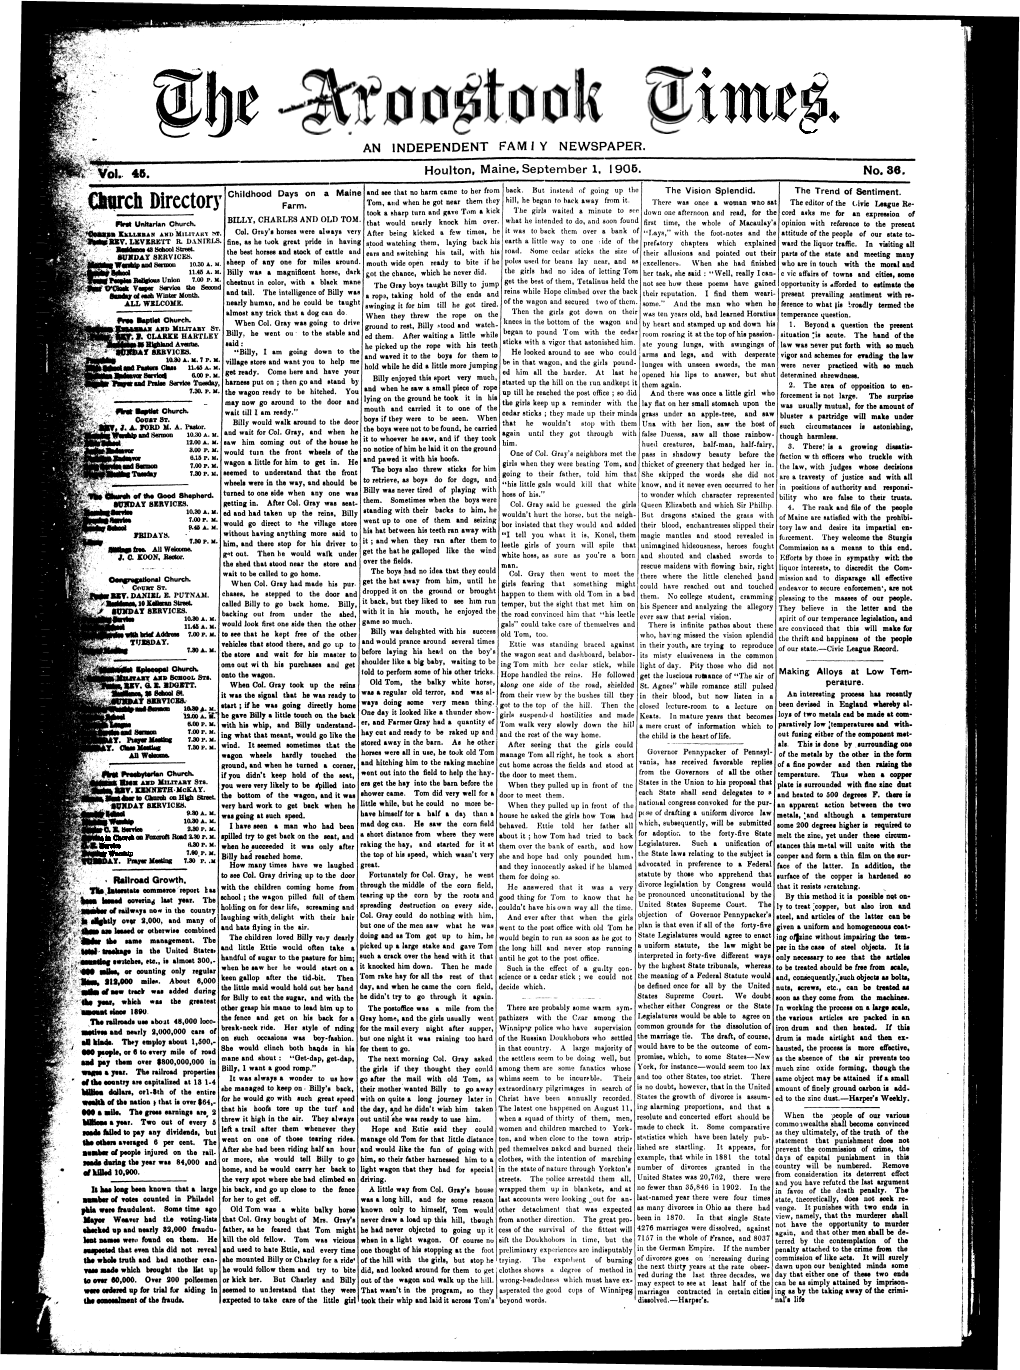 The Aroostook Times, September 1, 1905